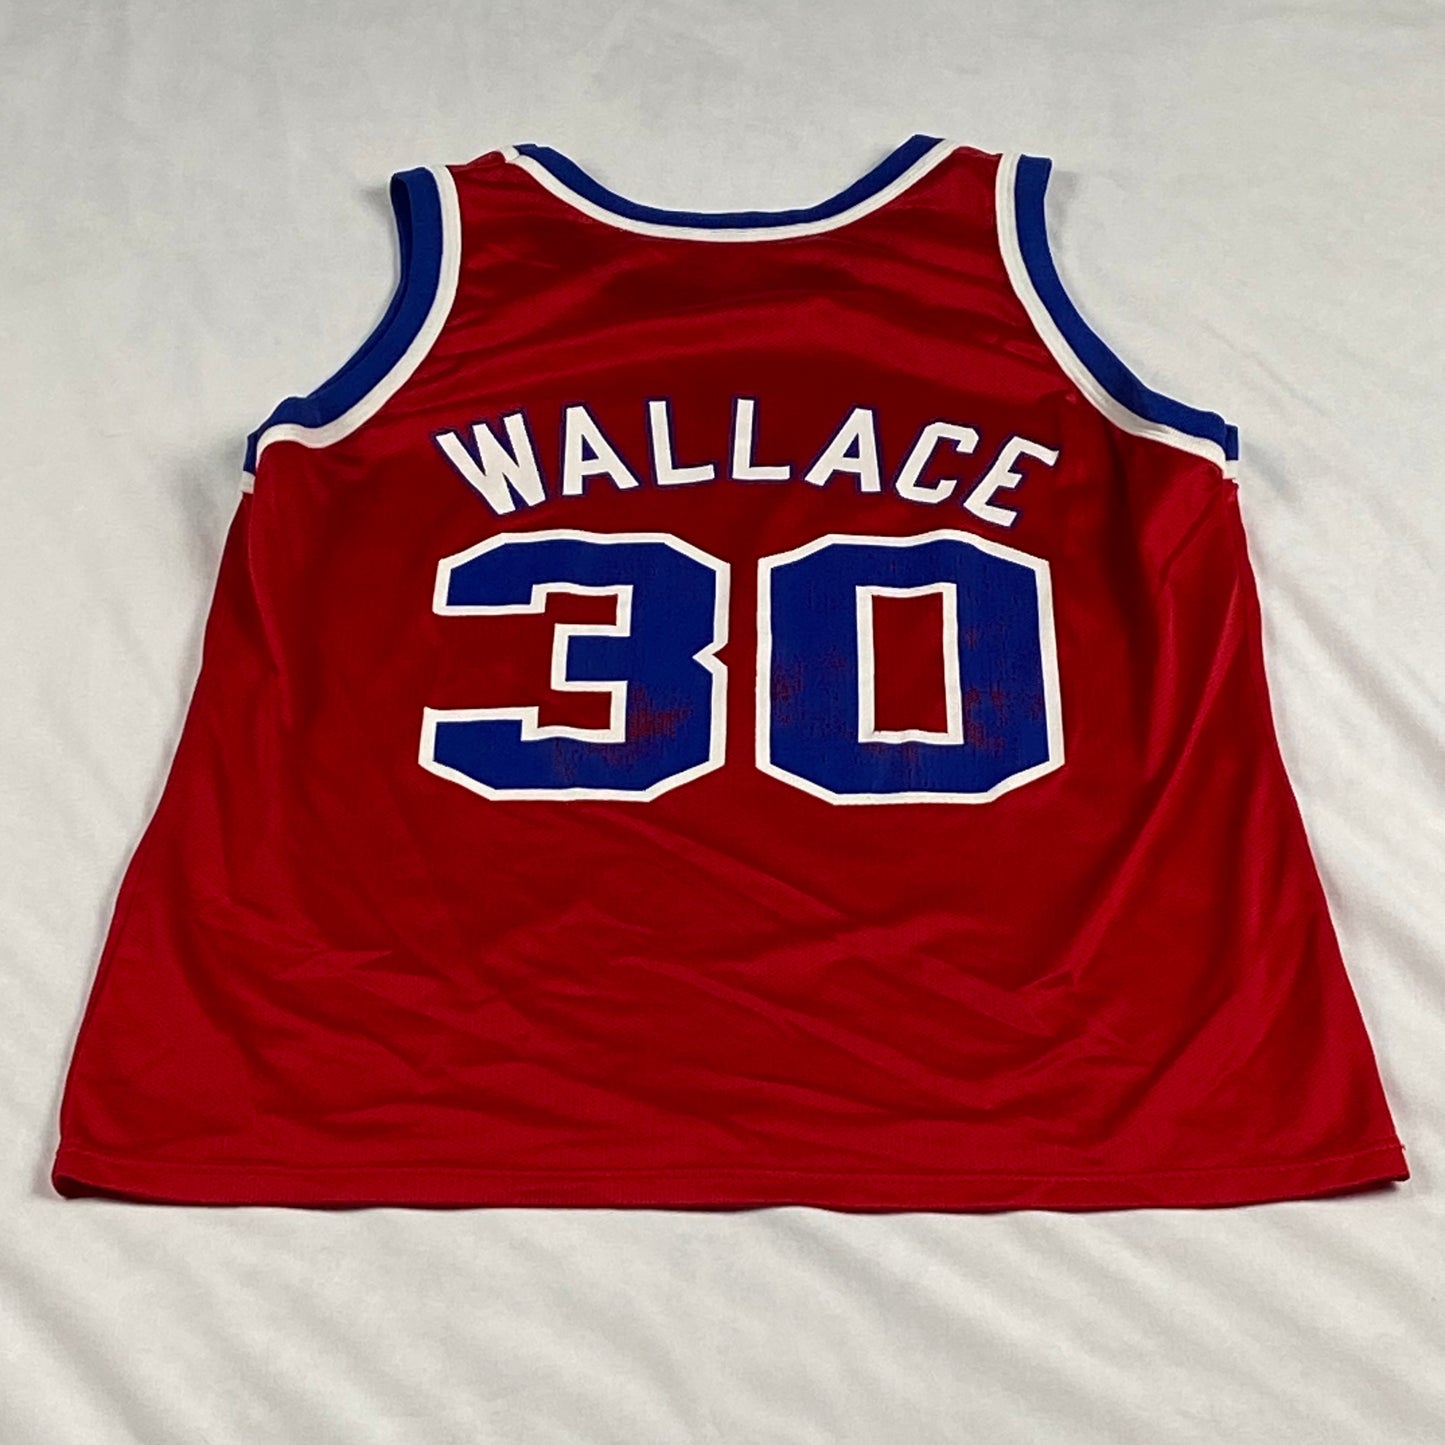 Washington Bullets Rasheed Wallace Champion Replica NBA Basketball Jersey